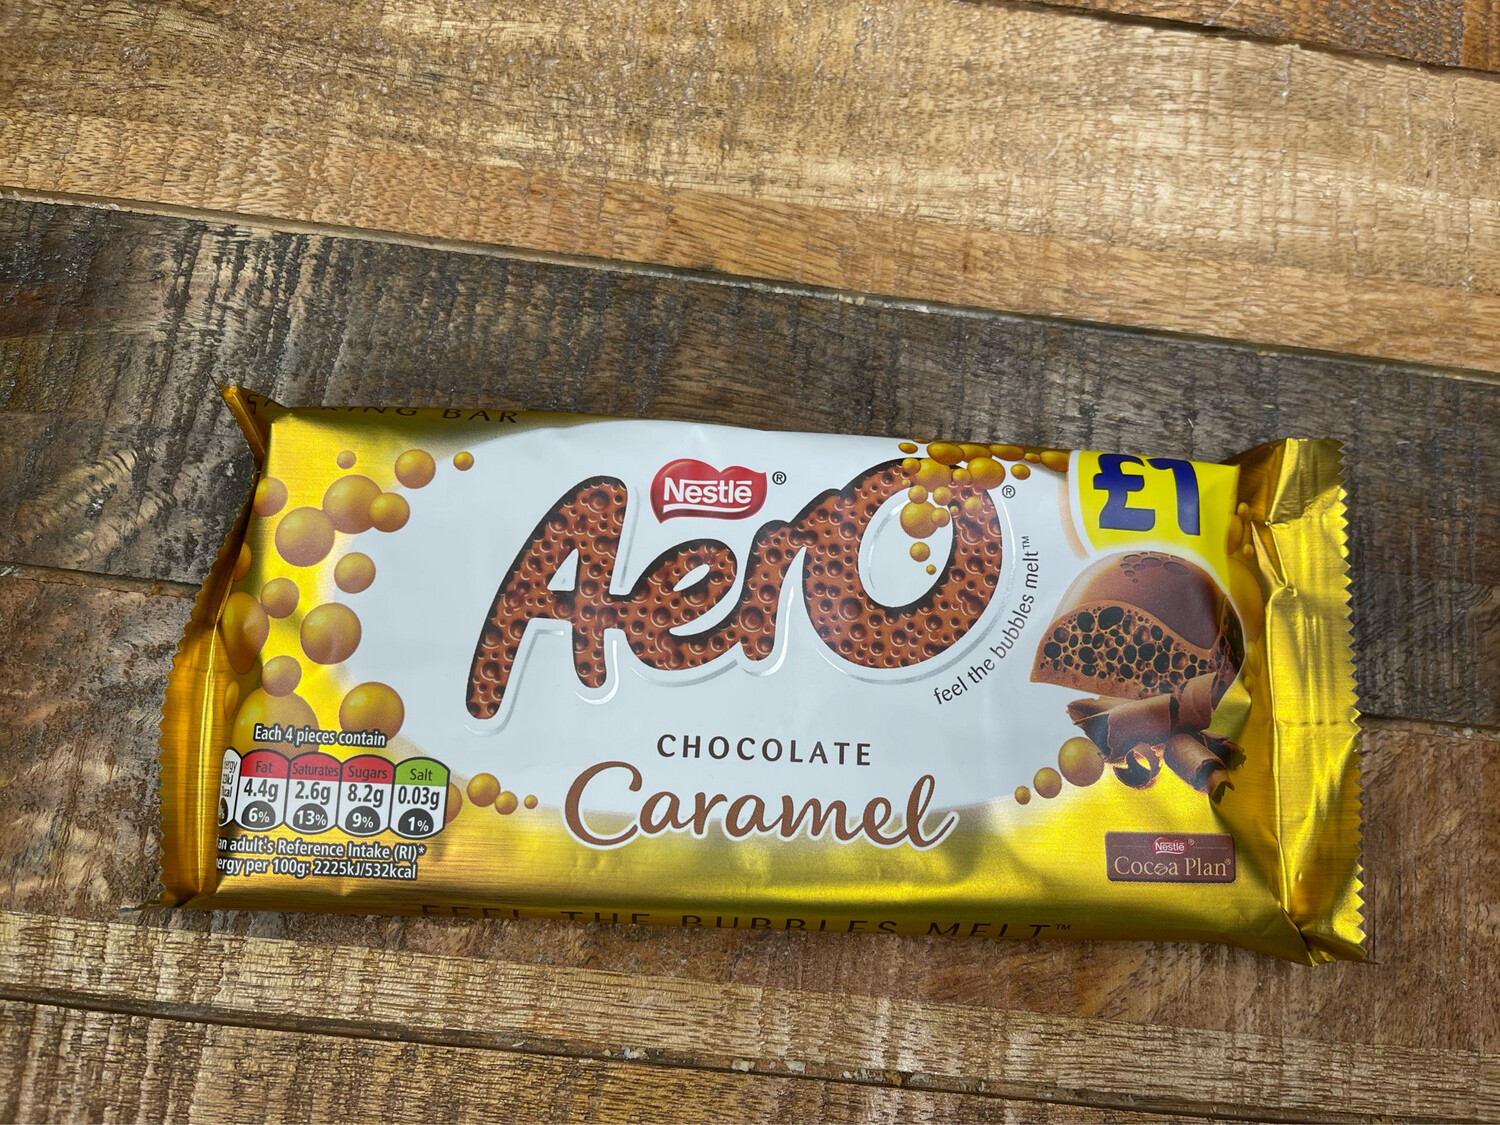 Aero Chocolate Caramel 90g